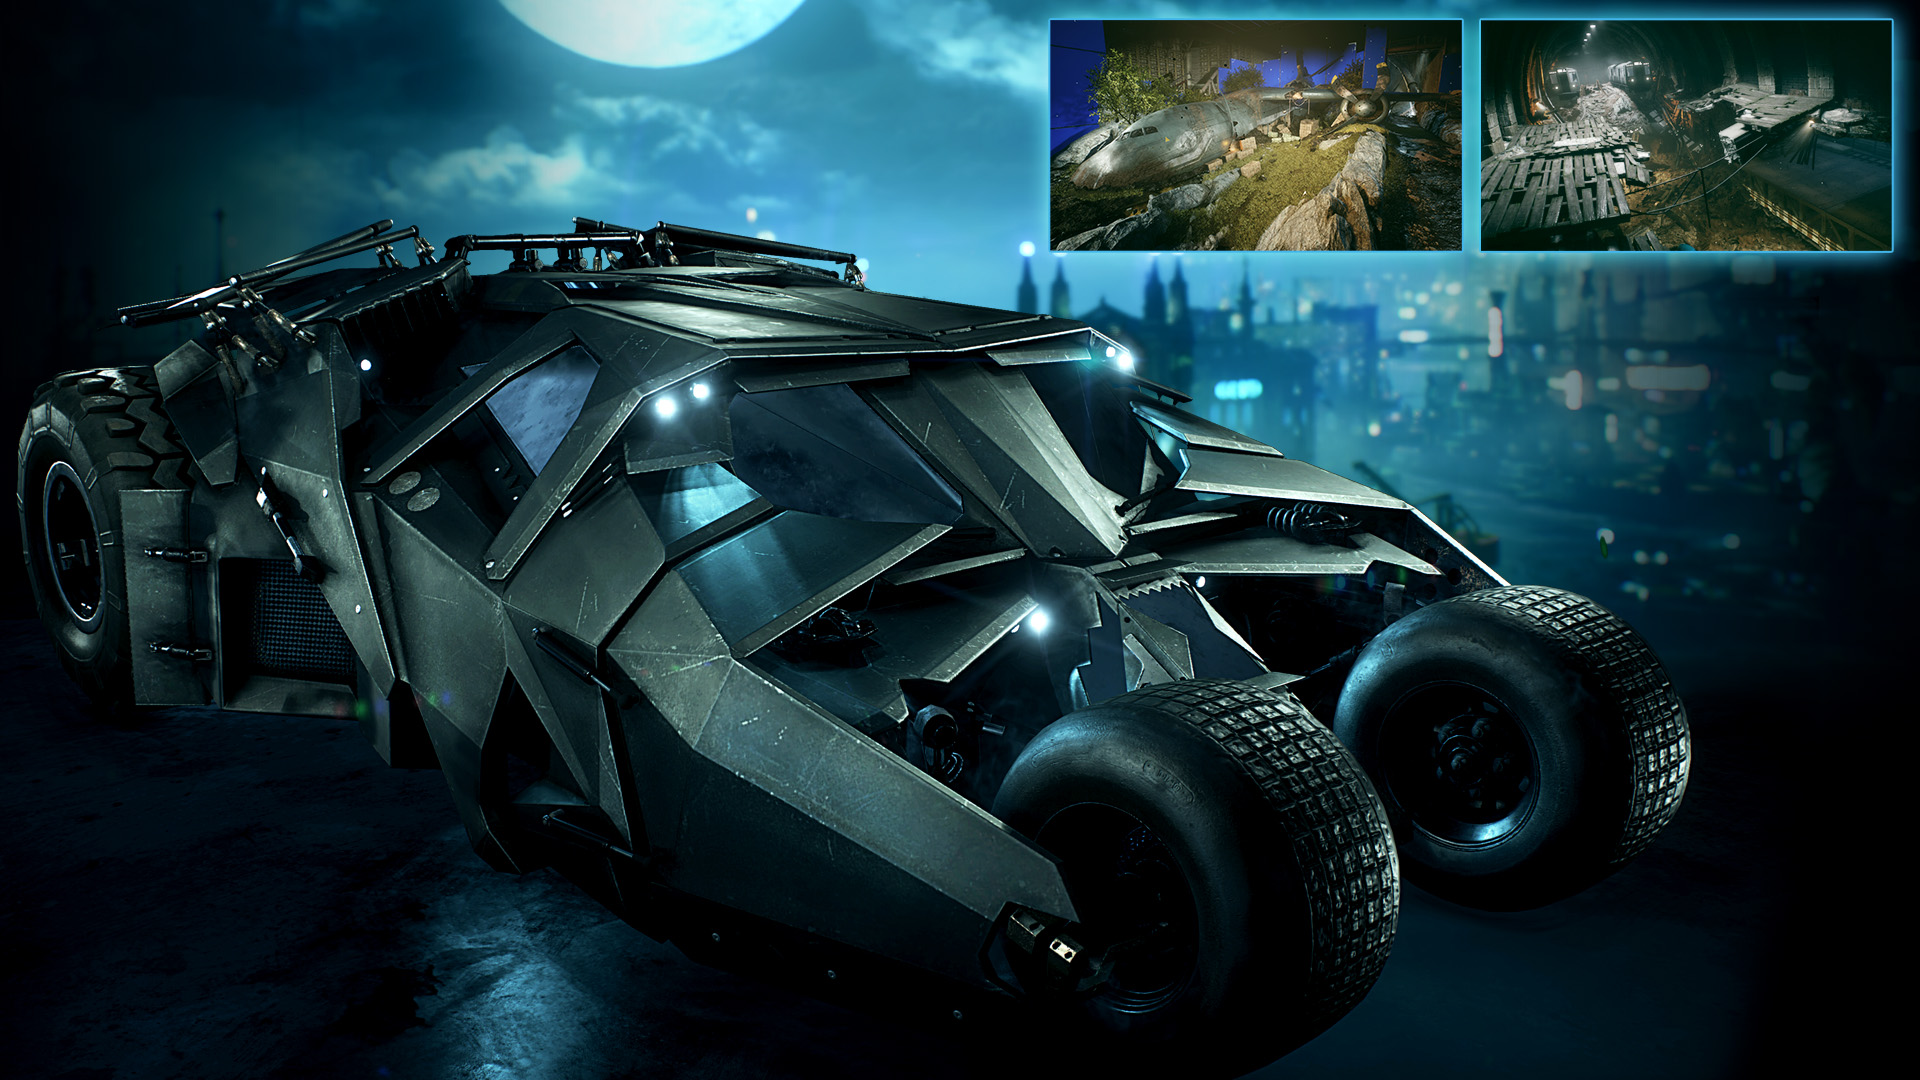 Firemobile skin mod Batman Arkham Knight by thebatmanhimself on